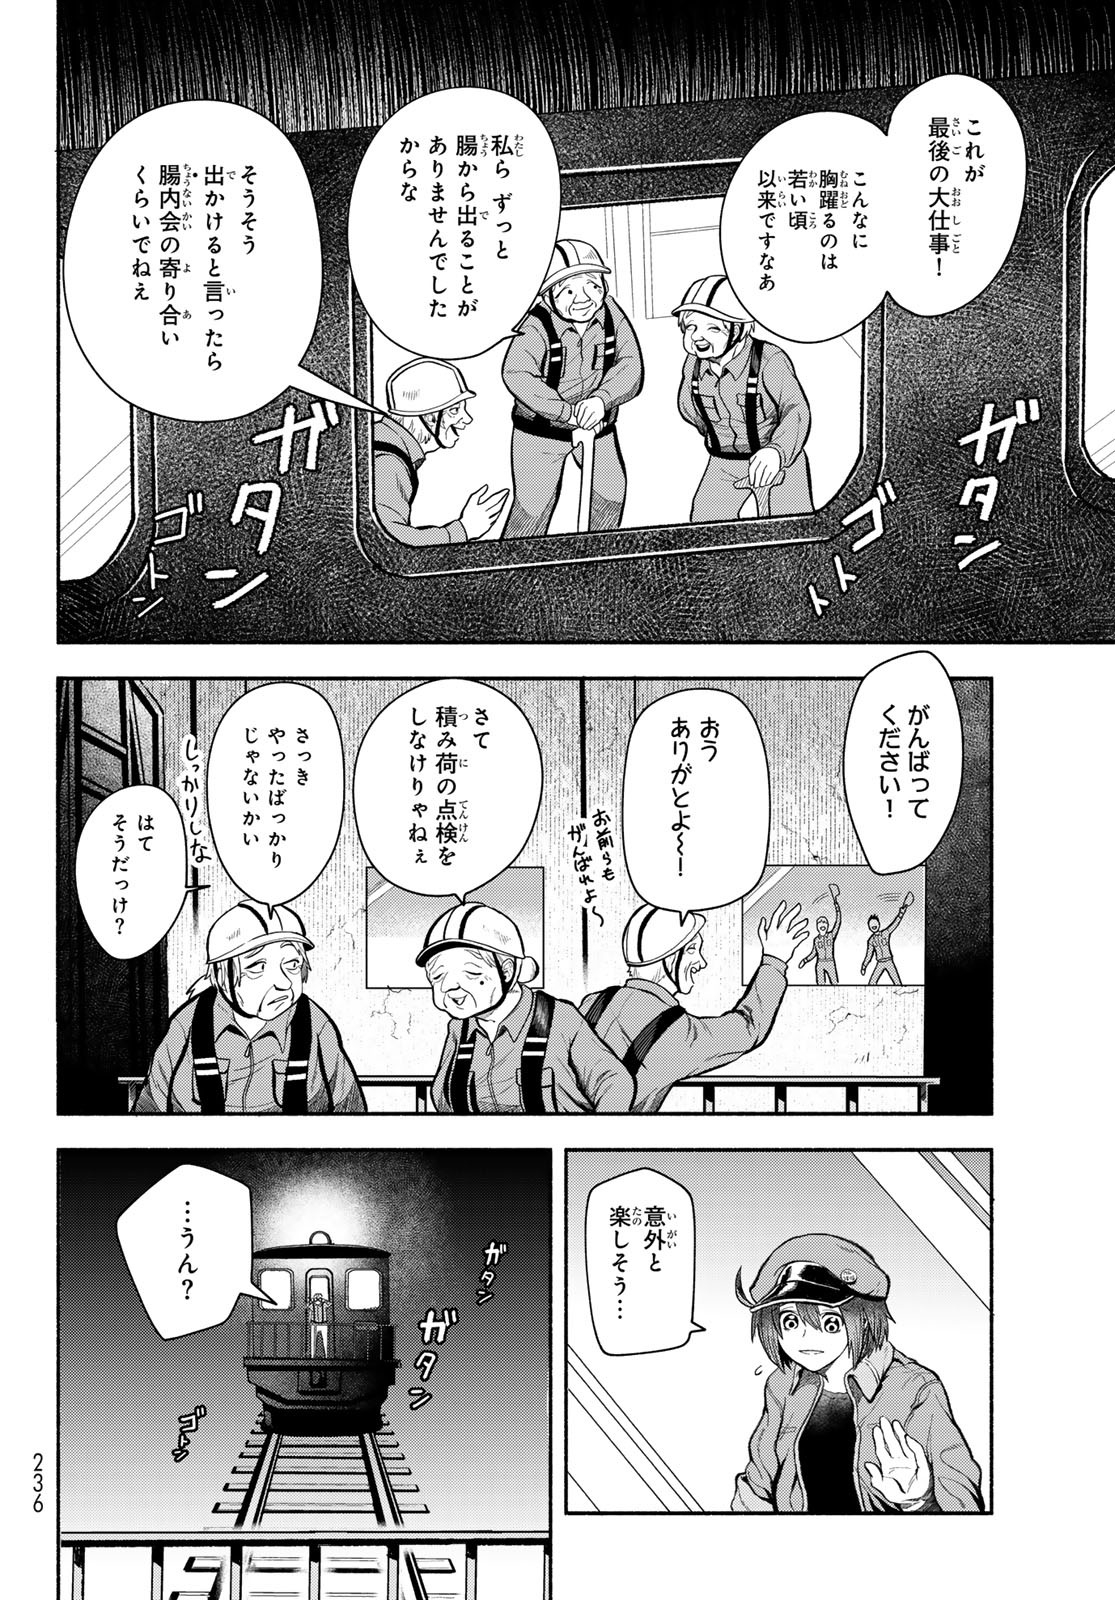 Hataraku Saibou Okusuri - Chapter 5 - Page 6